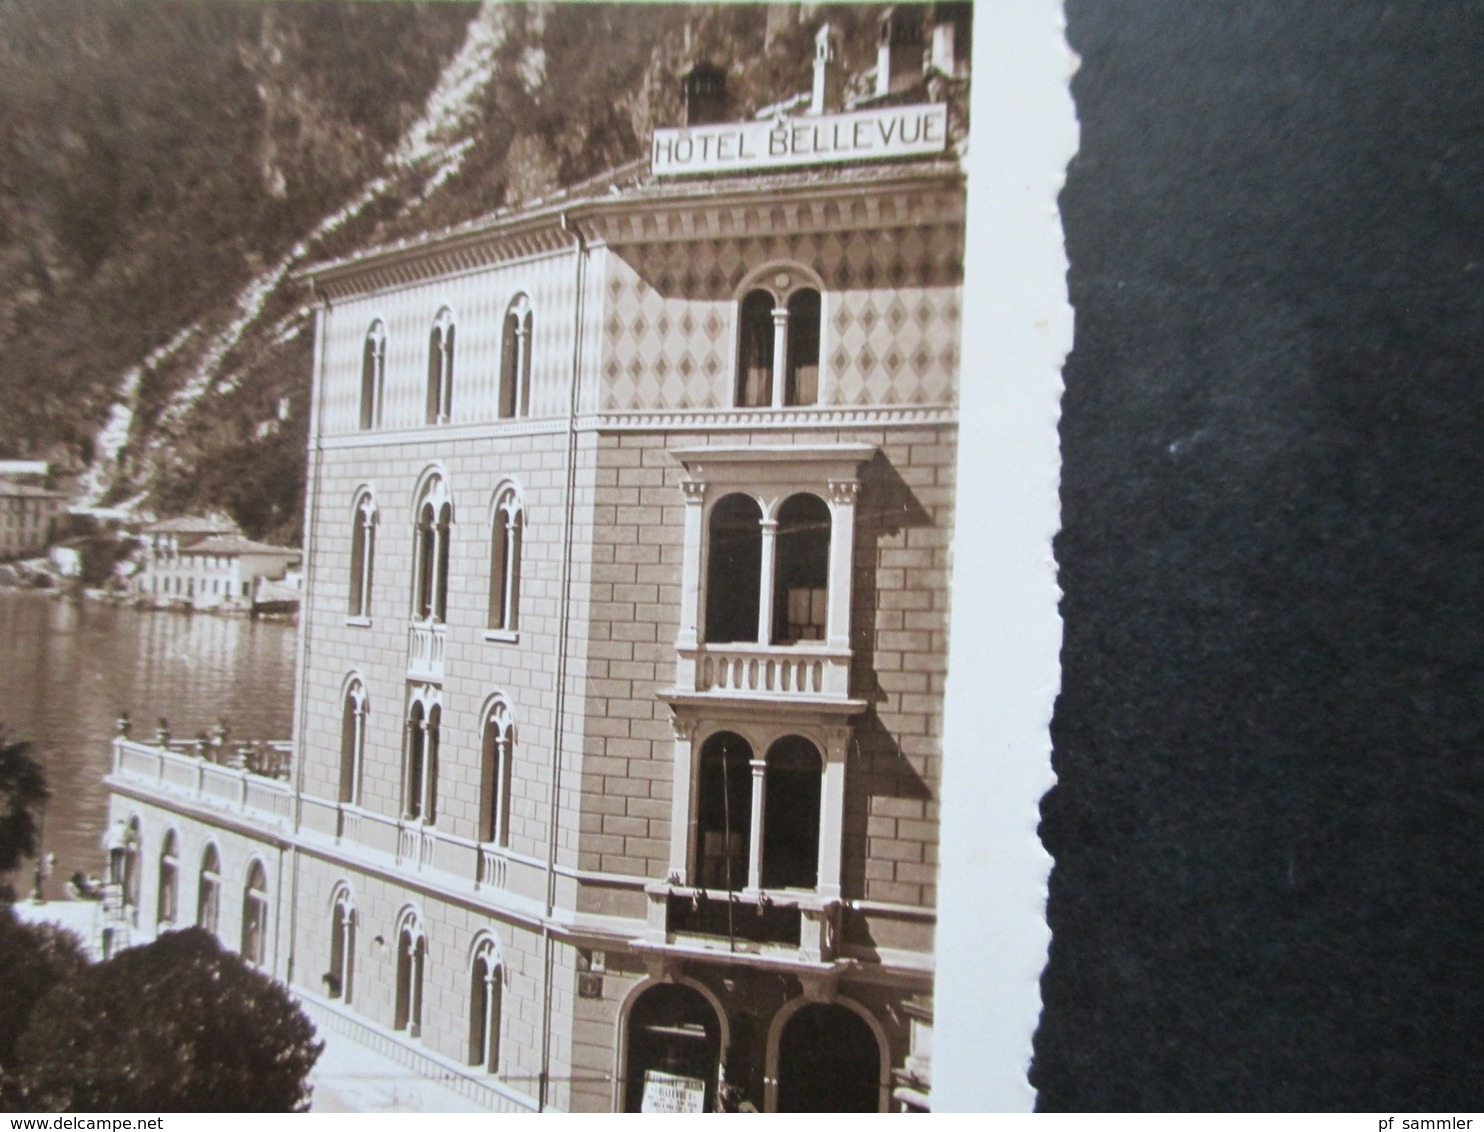 Echtfoto AK Italien 1934 Riva Giardini Caducci Mit Hotel Bellevue Bildseitig Frankiert! - Hotels & Gaststätten